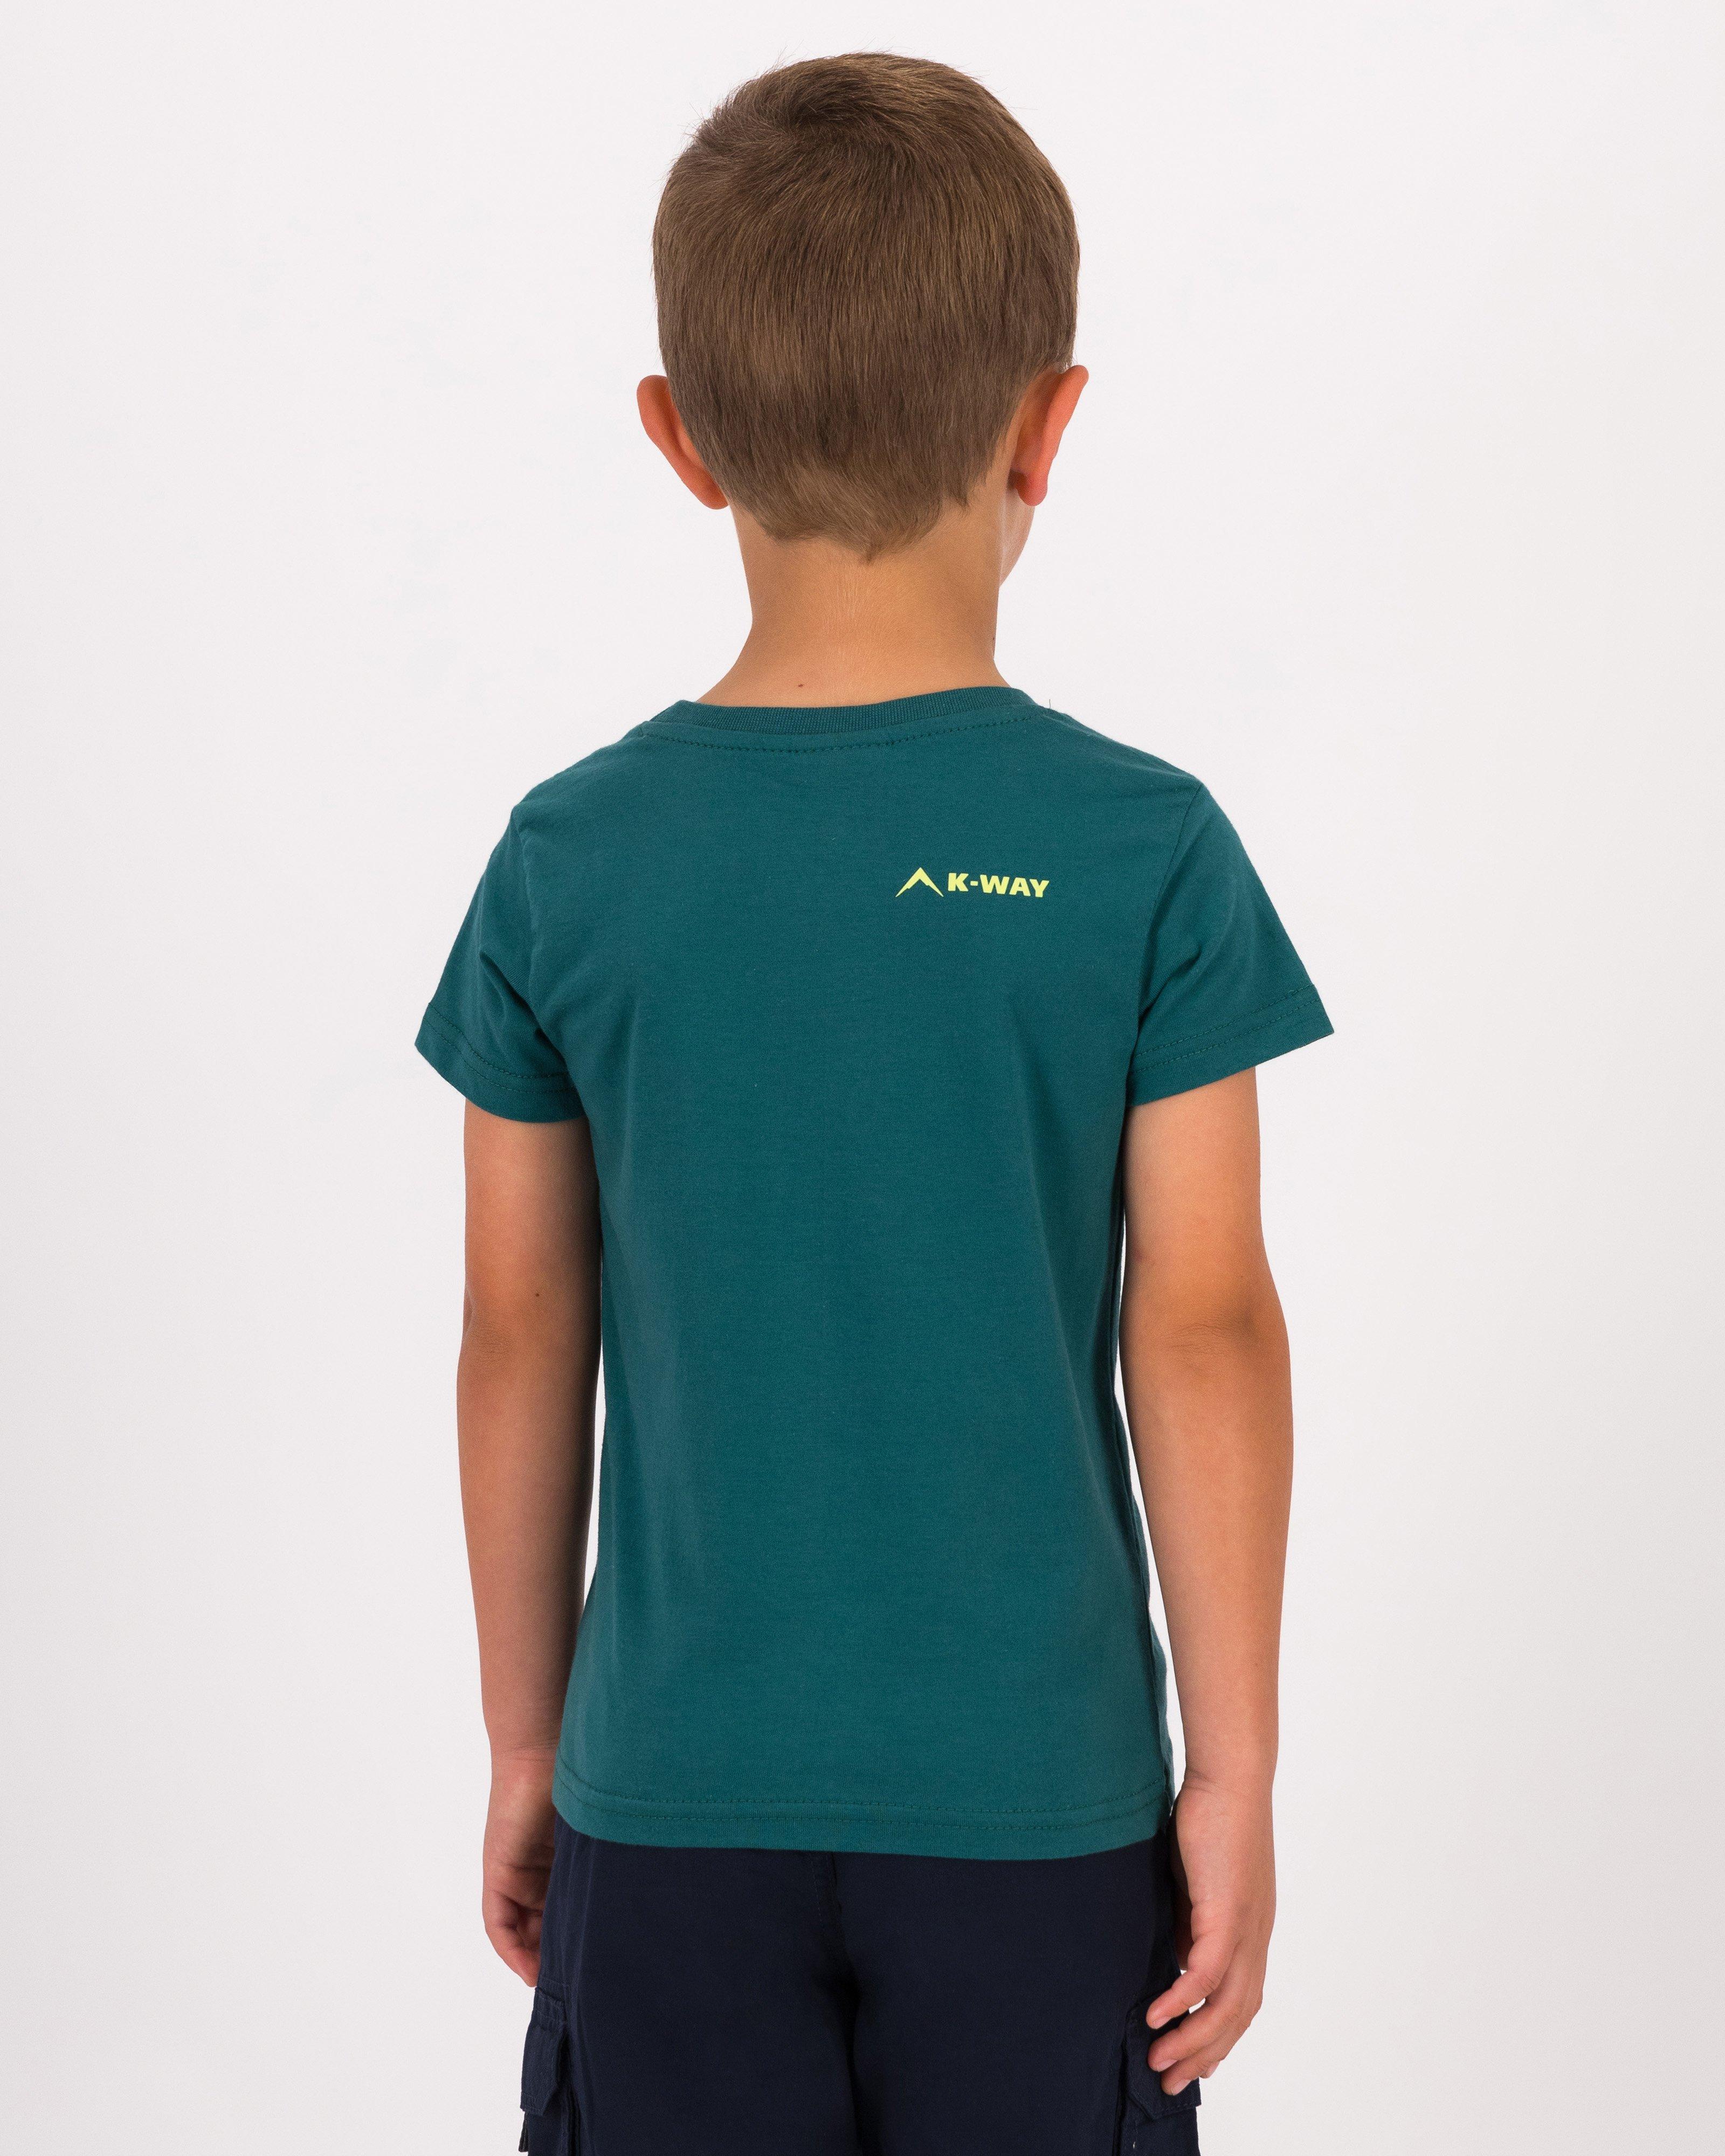 K-Way Kids Graphic T-shirt -  Bottle Green